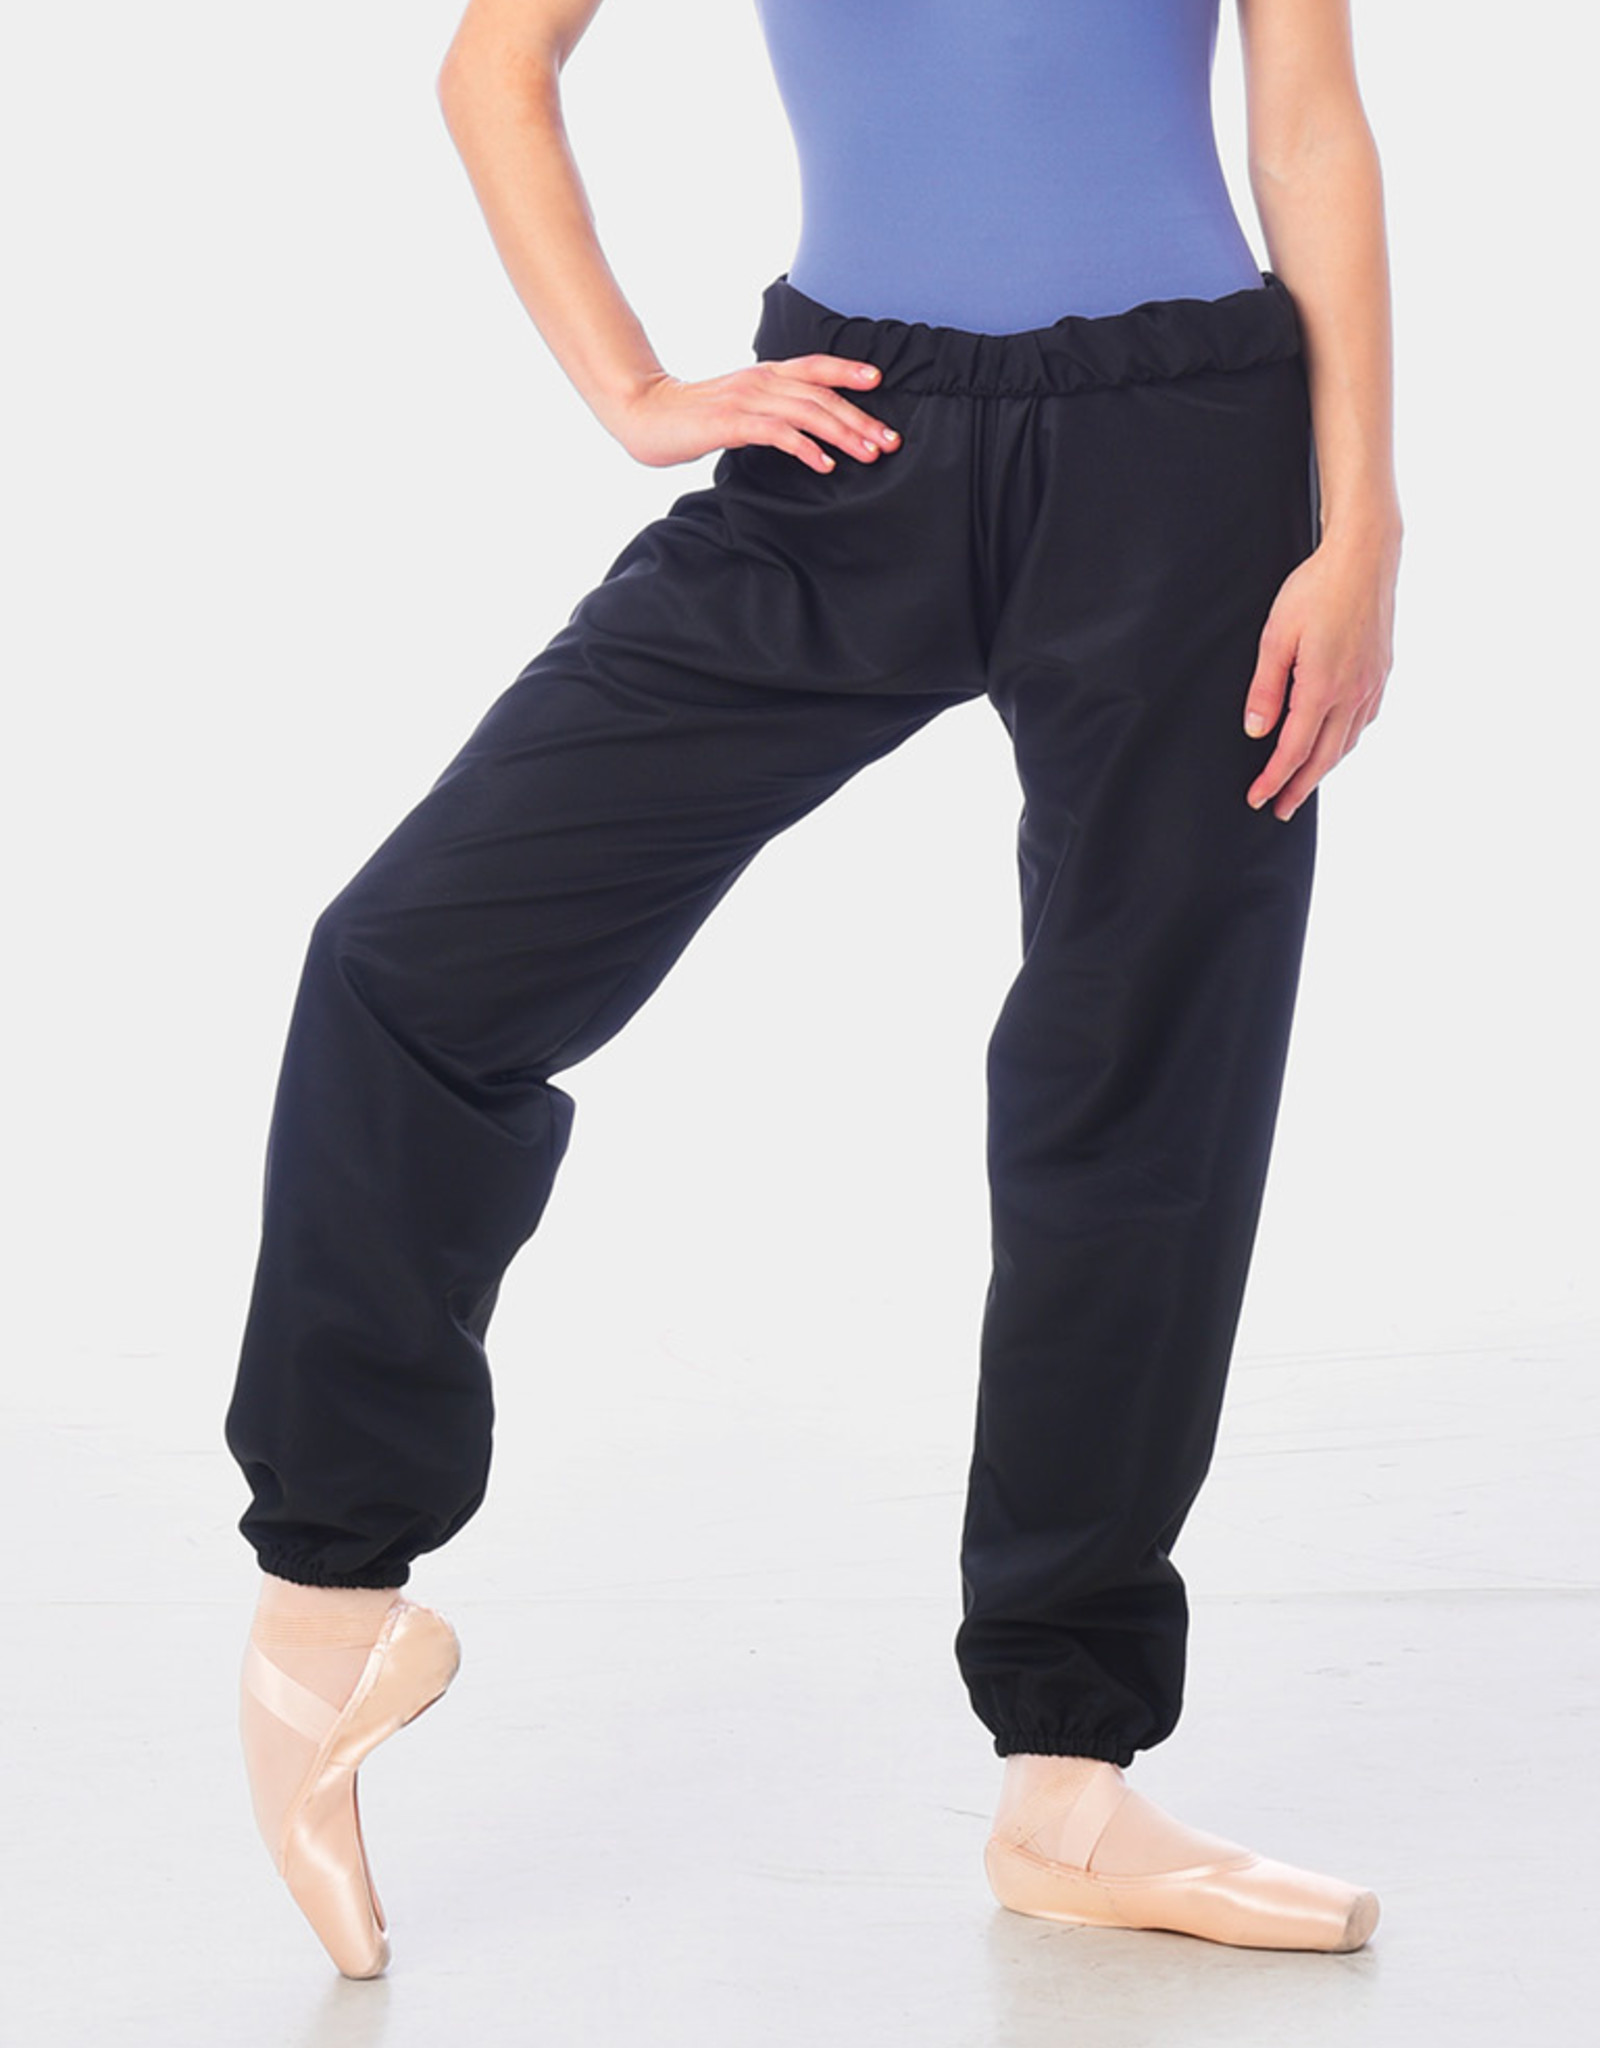 Gaynor Minden Ladies' AW-122 Warm-Up Pants